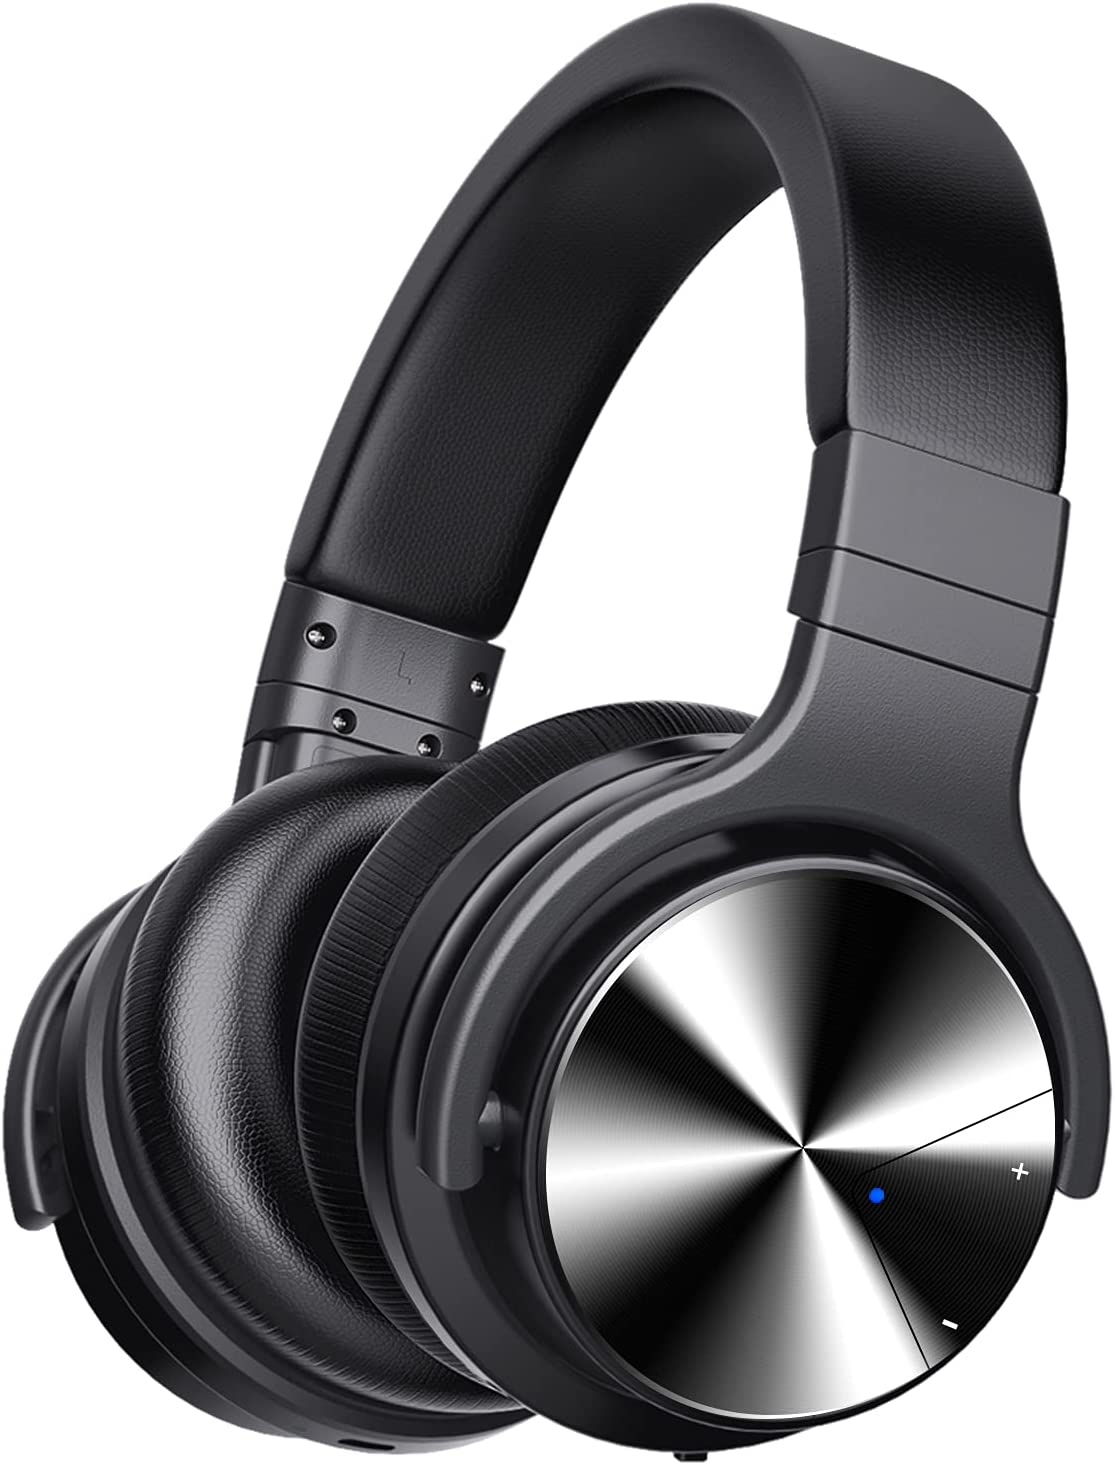 Qisebin E7 PRO Active Noise Cancelling Headphones – Just $55.90 at Amazon